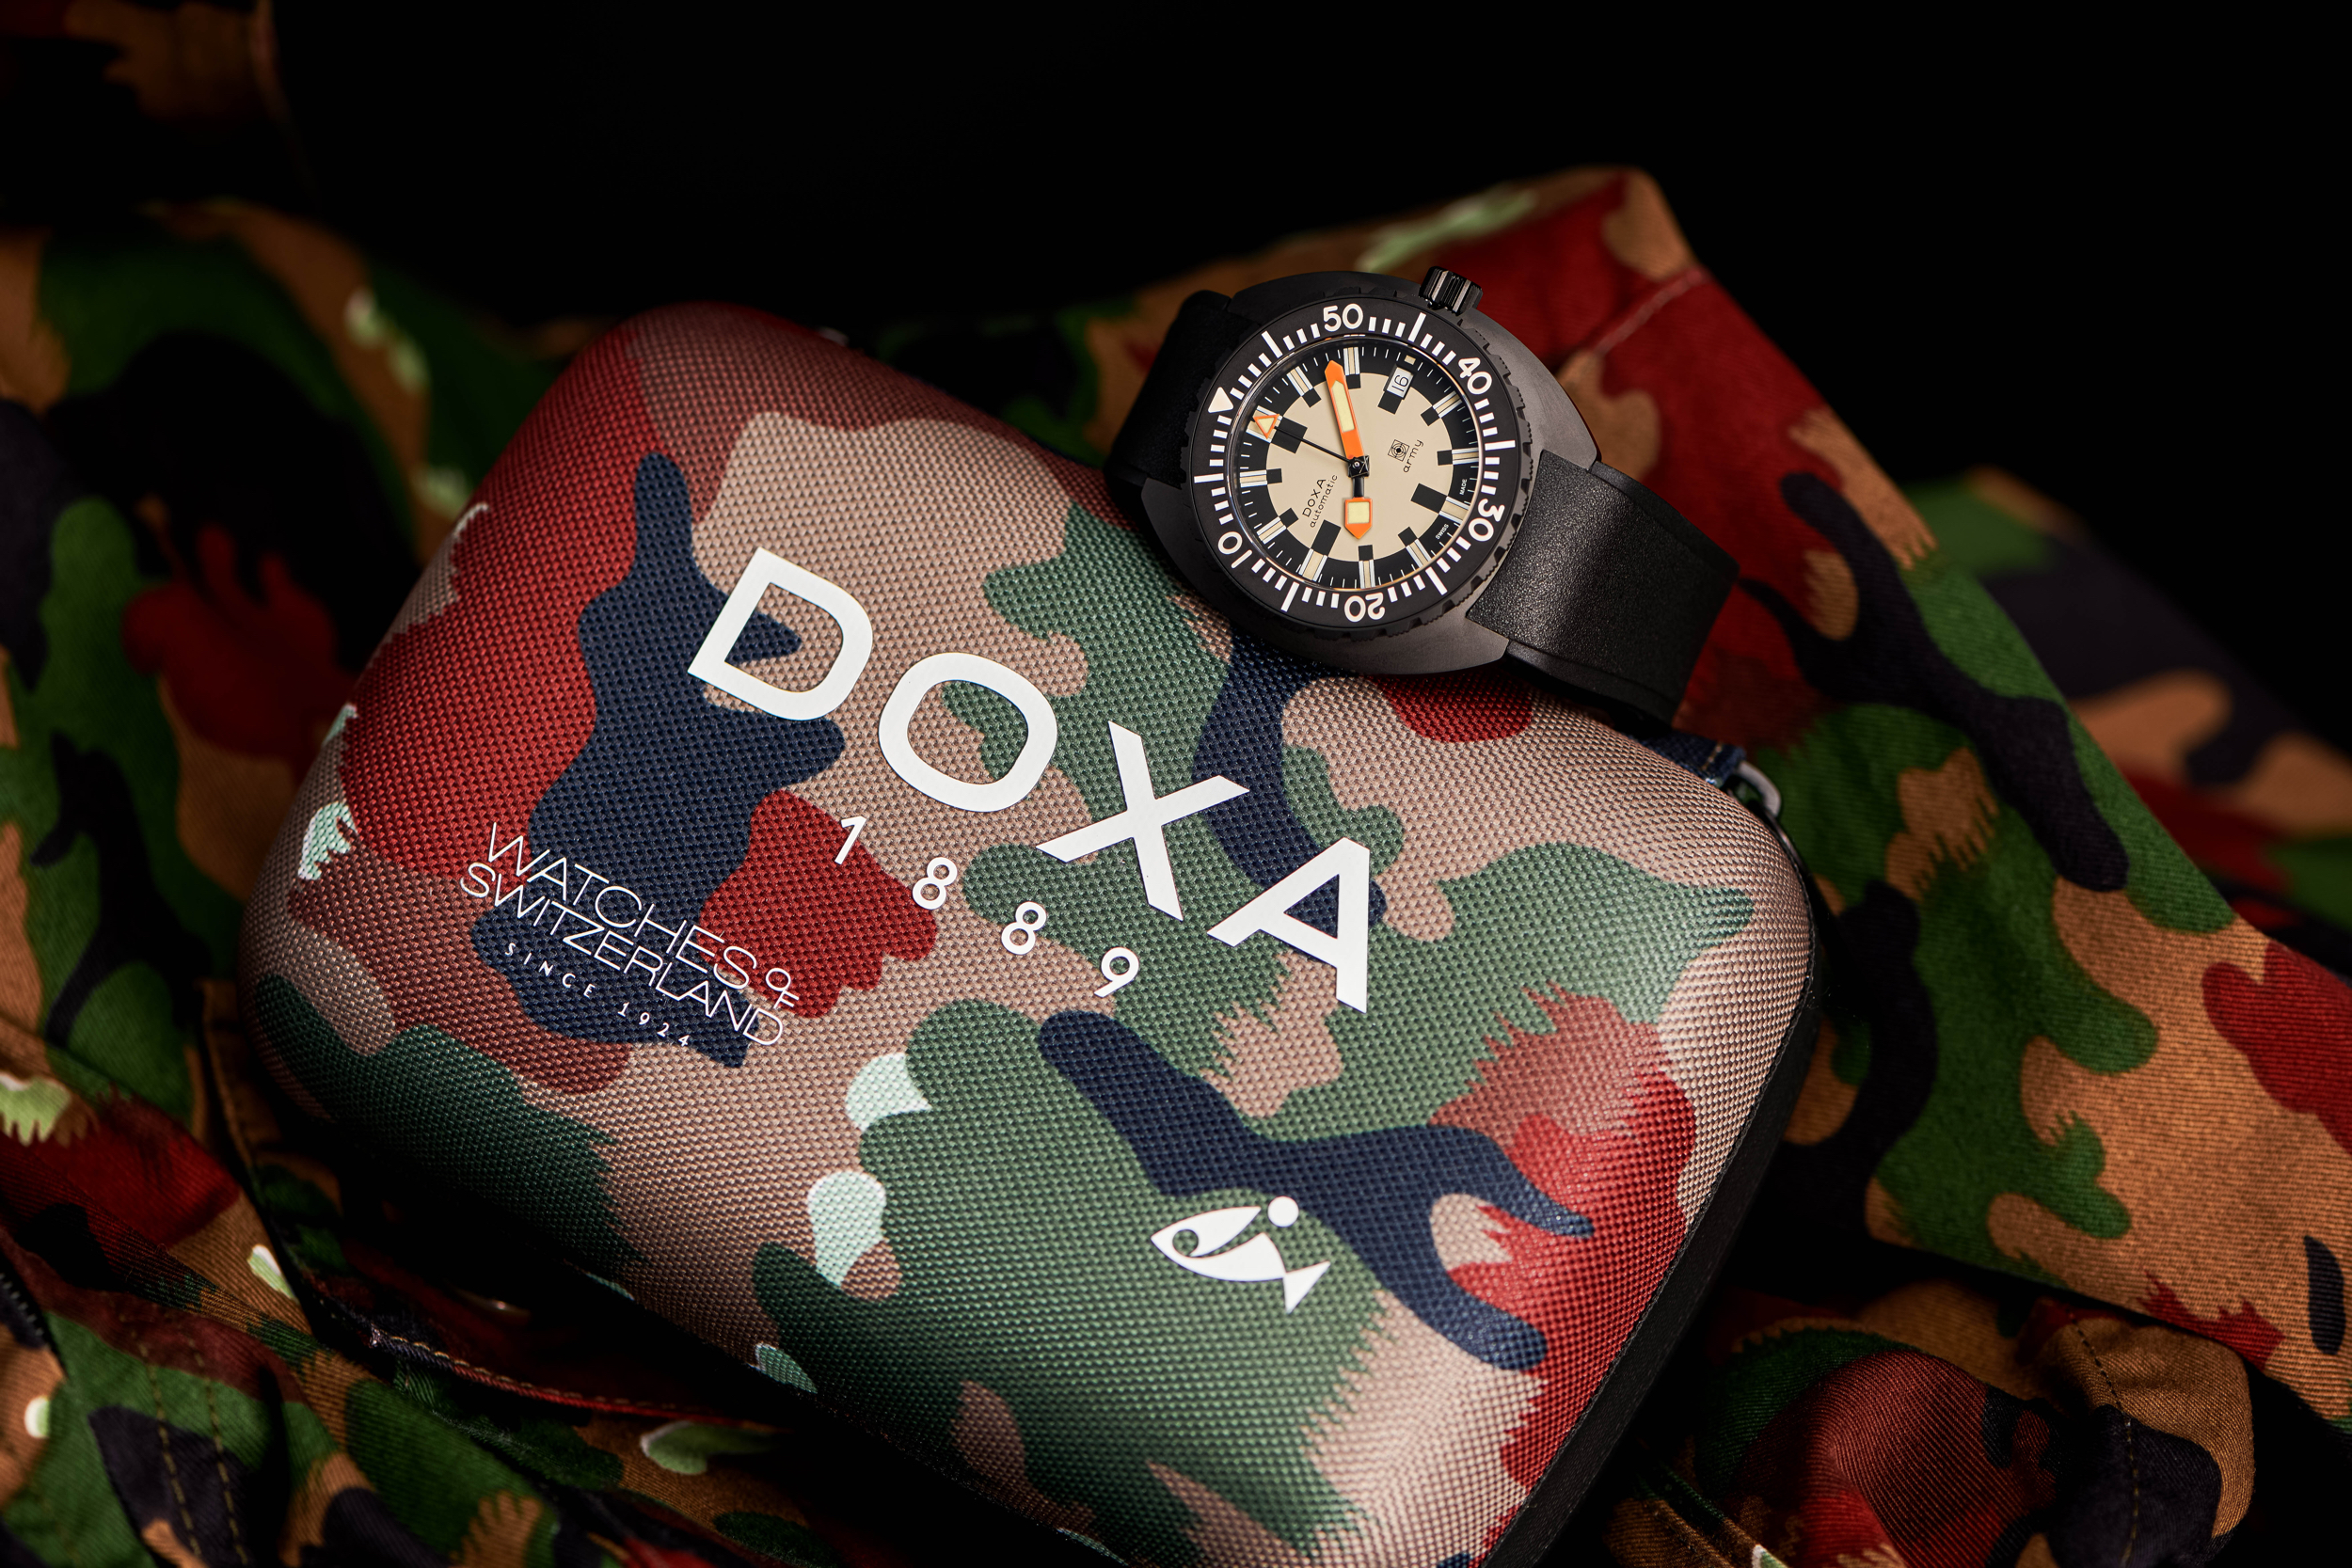 Doxa Army Watches of Switzerland Edition